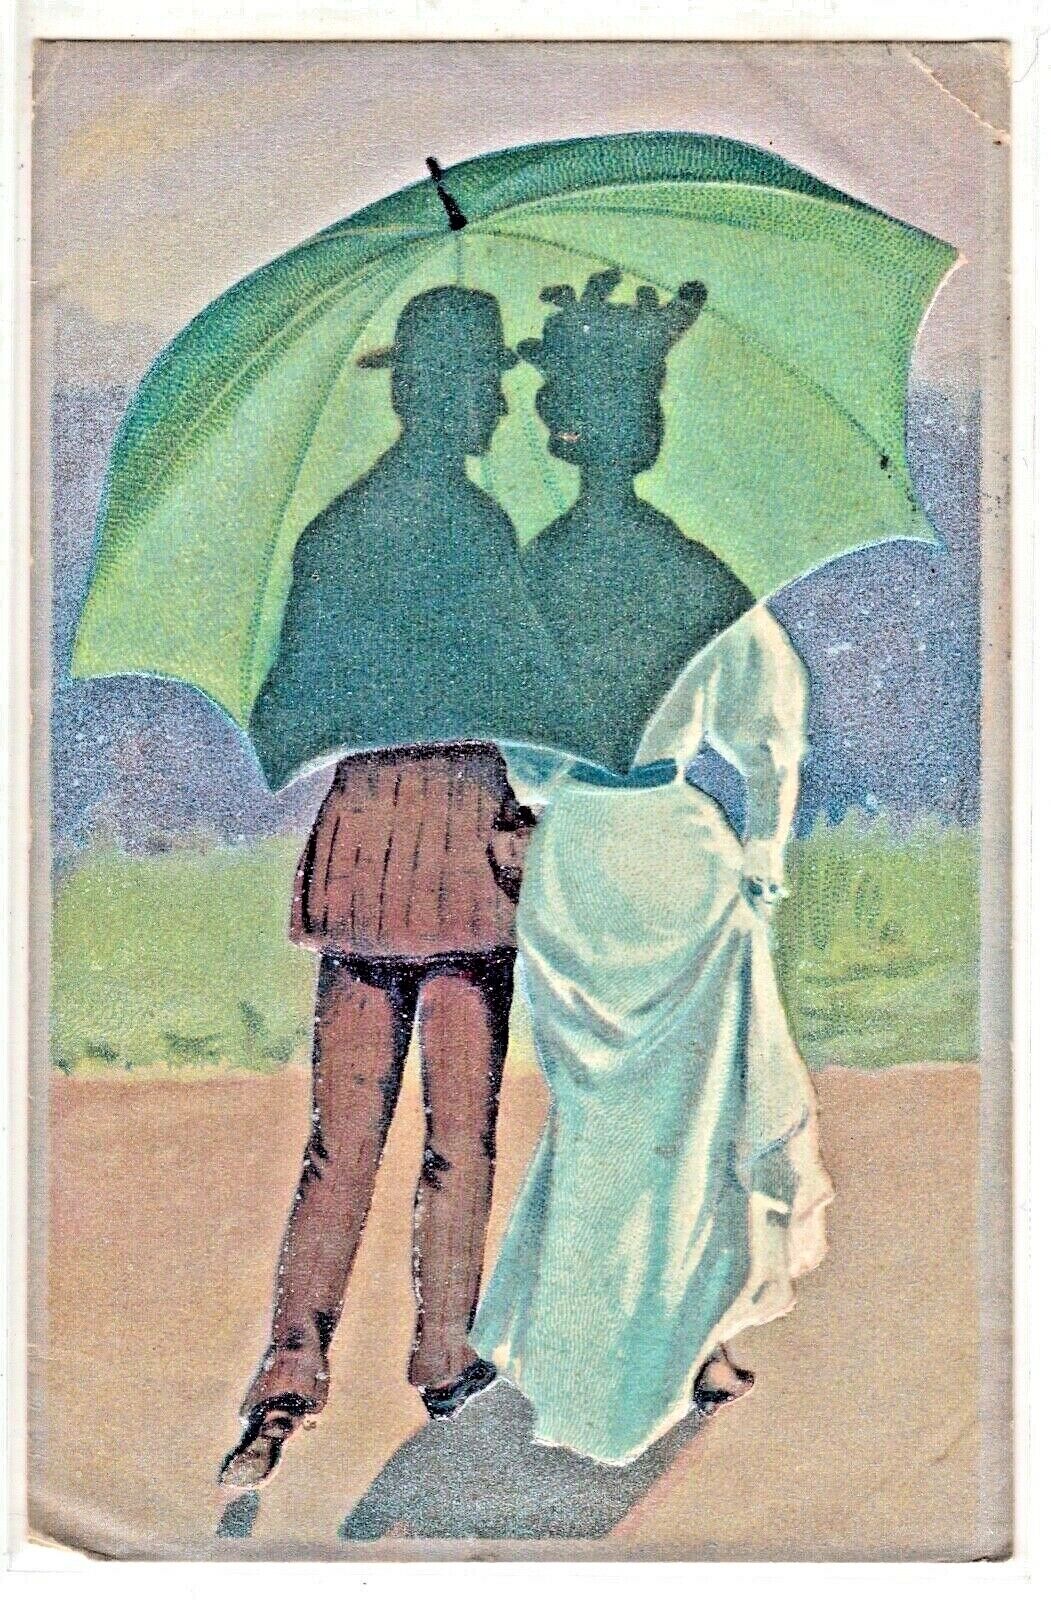  A/S Couple Walking Silhouette Umbrella Parasol Period Clothing  P.U.1908 (Z58A)